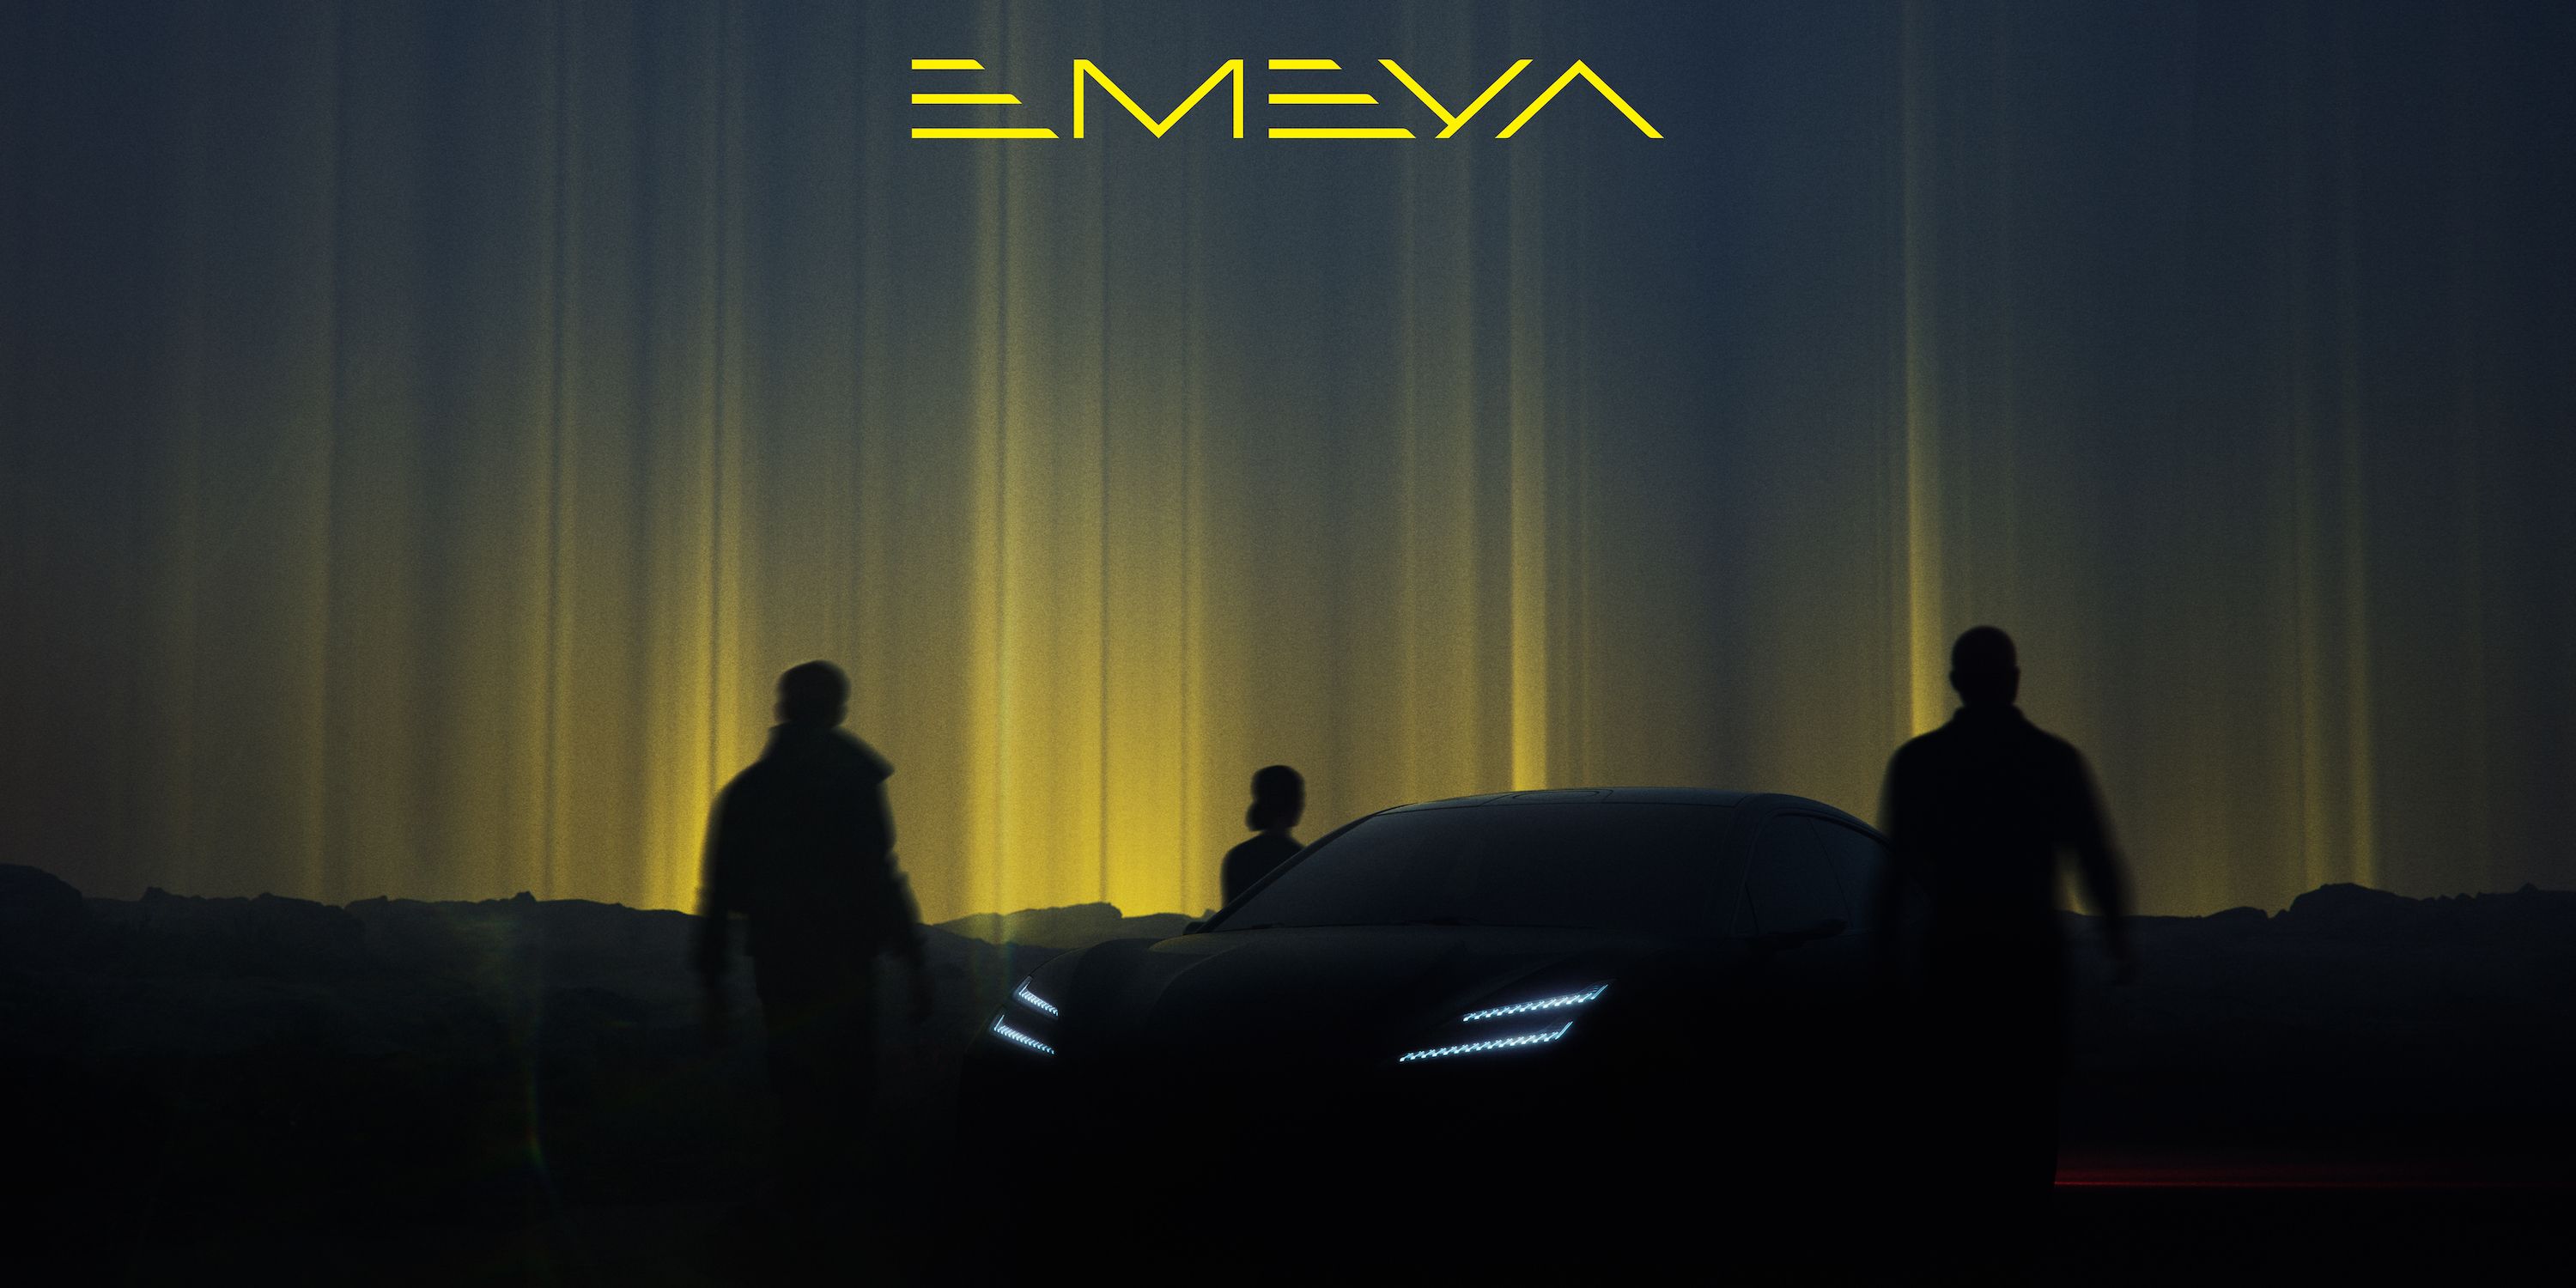 The Lotus Emeya Will Be Its EV Super Sedan